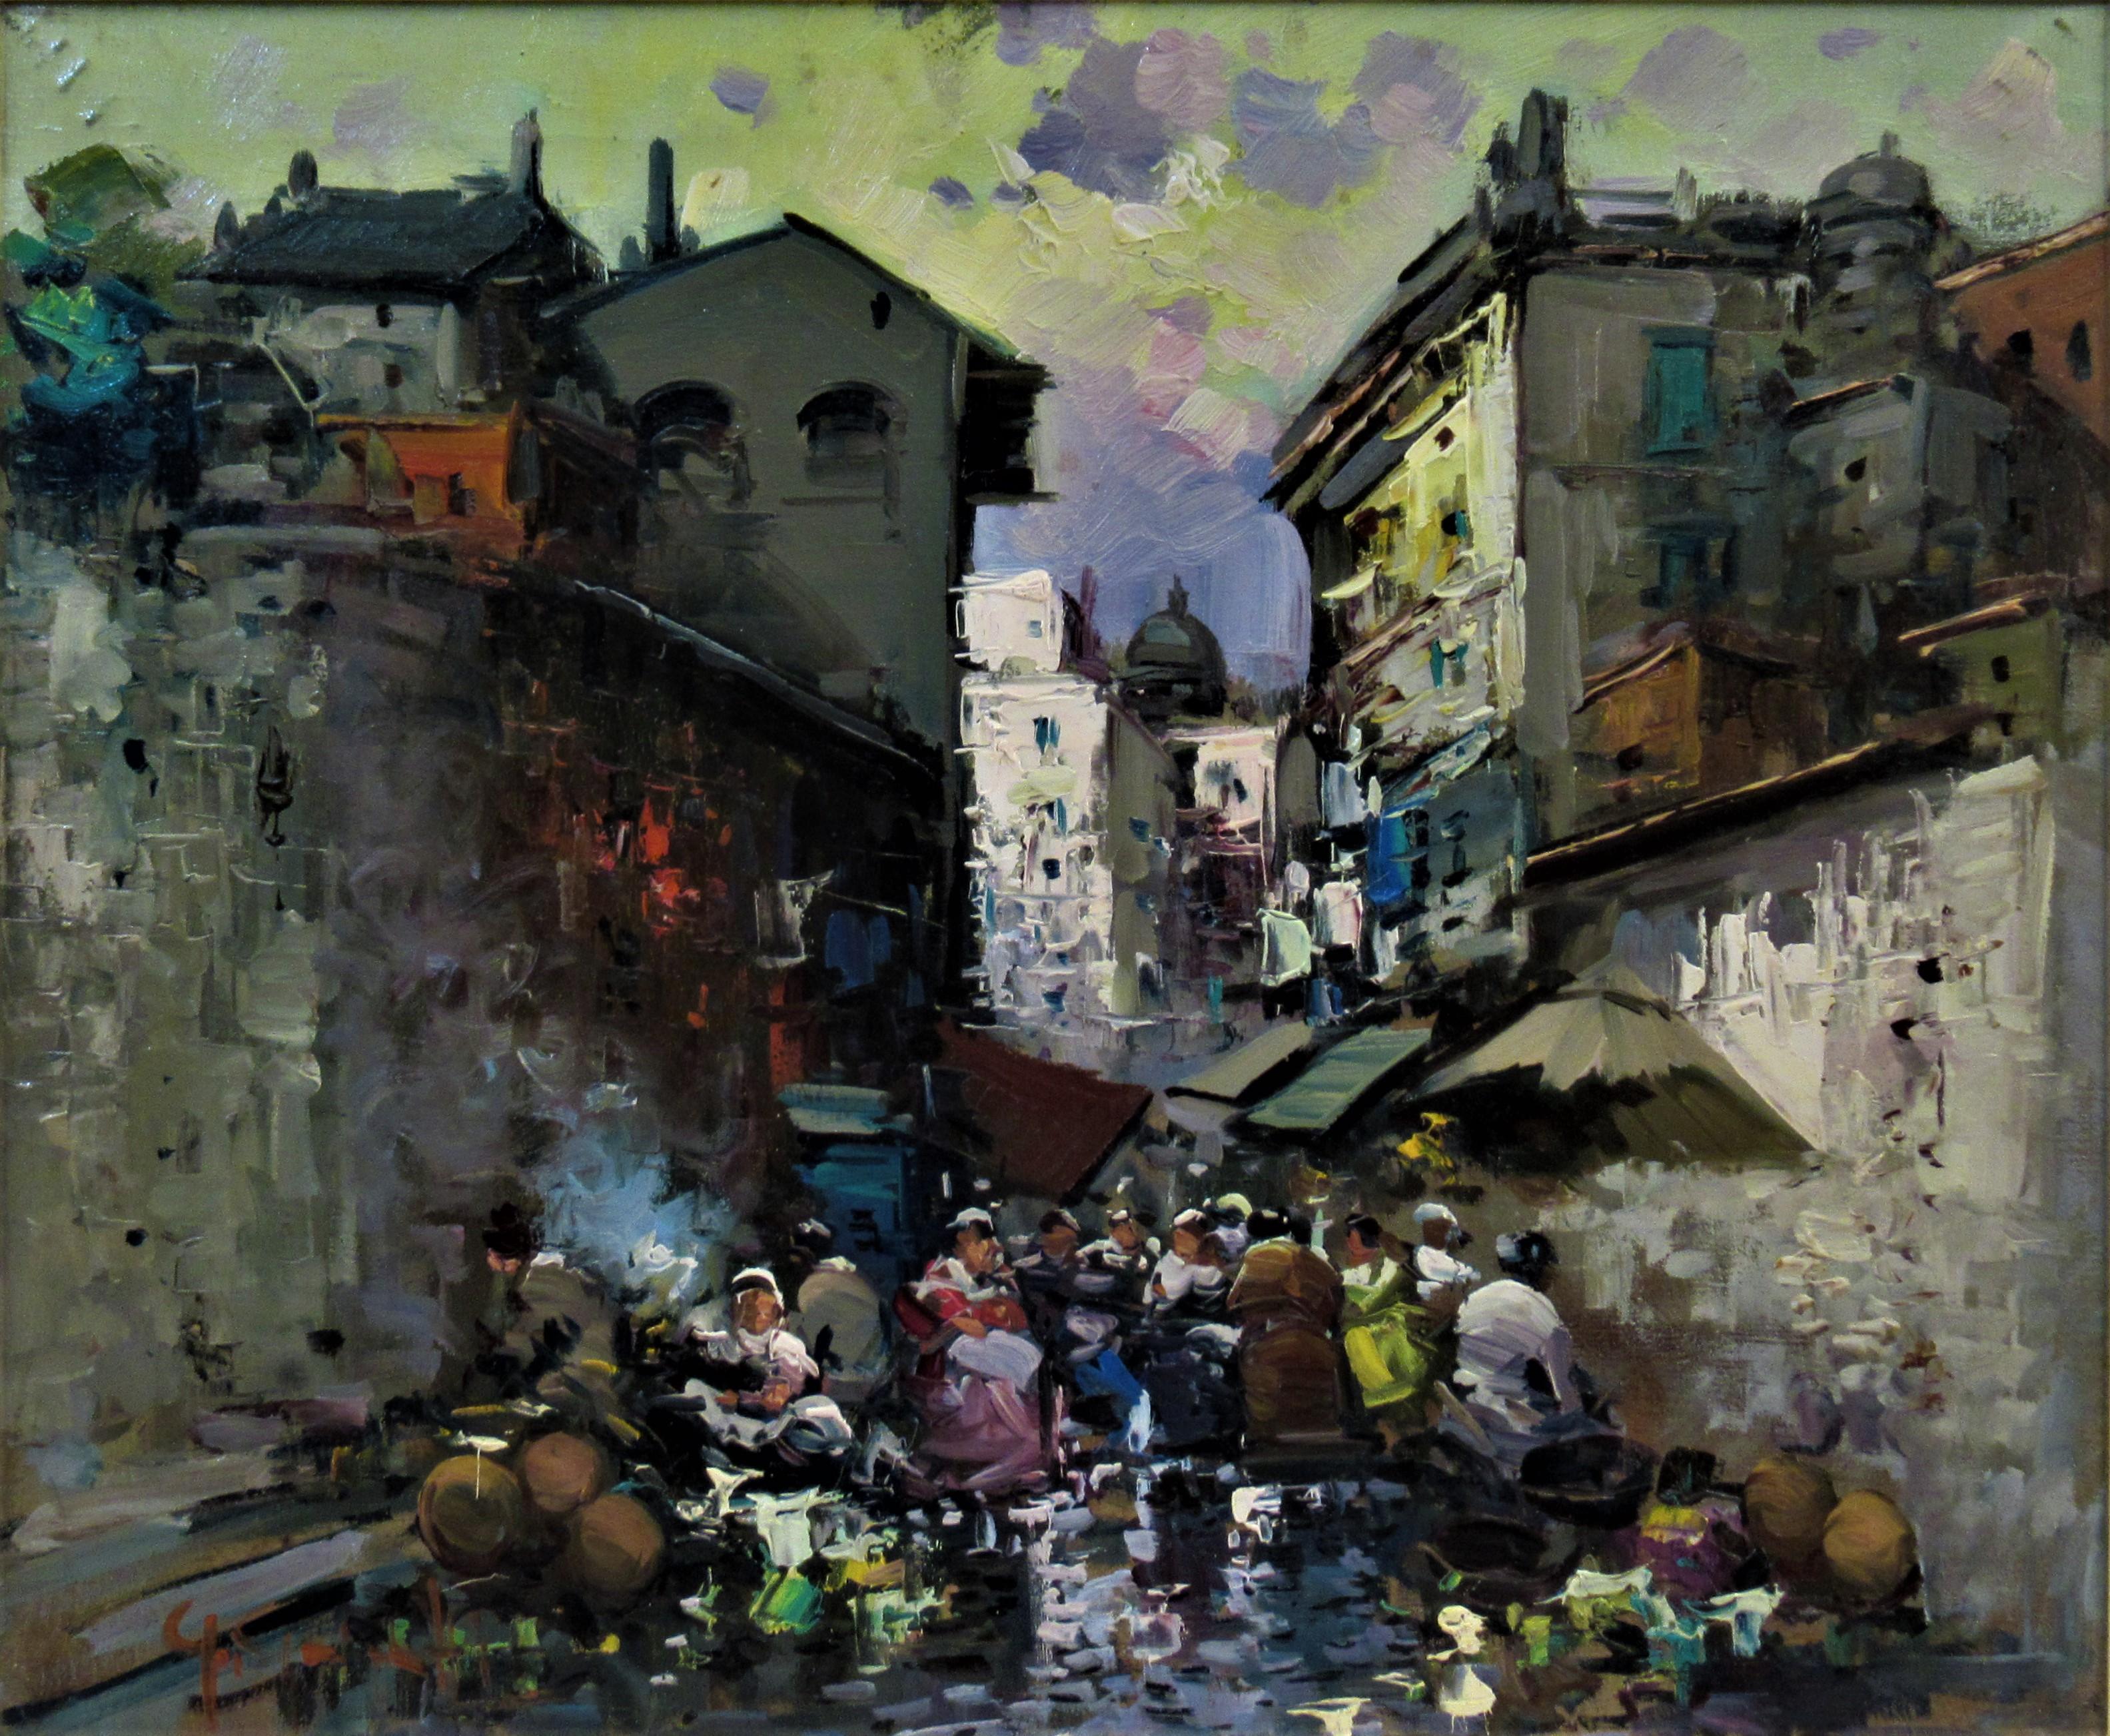 Street Market - Painting by Giovani Guarlotti